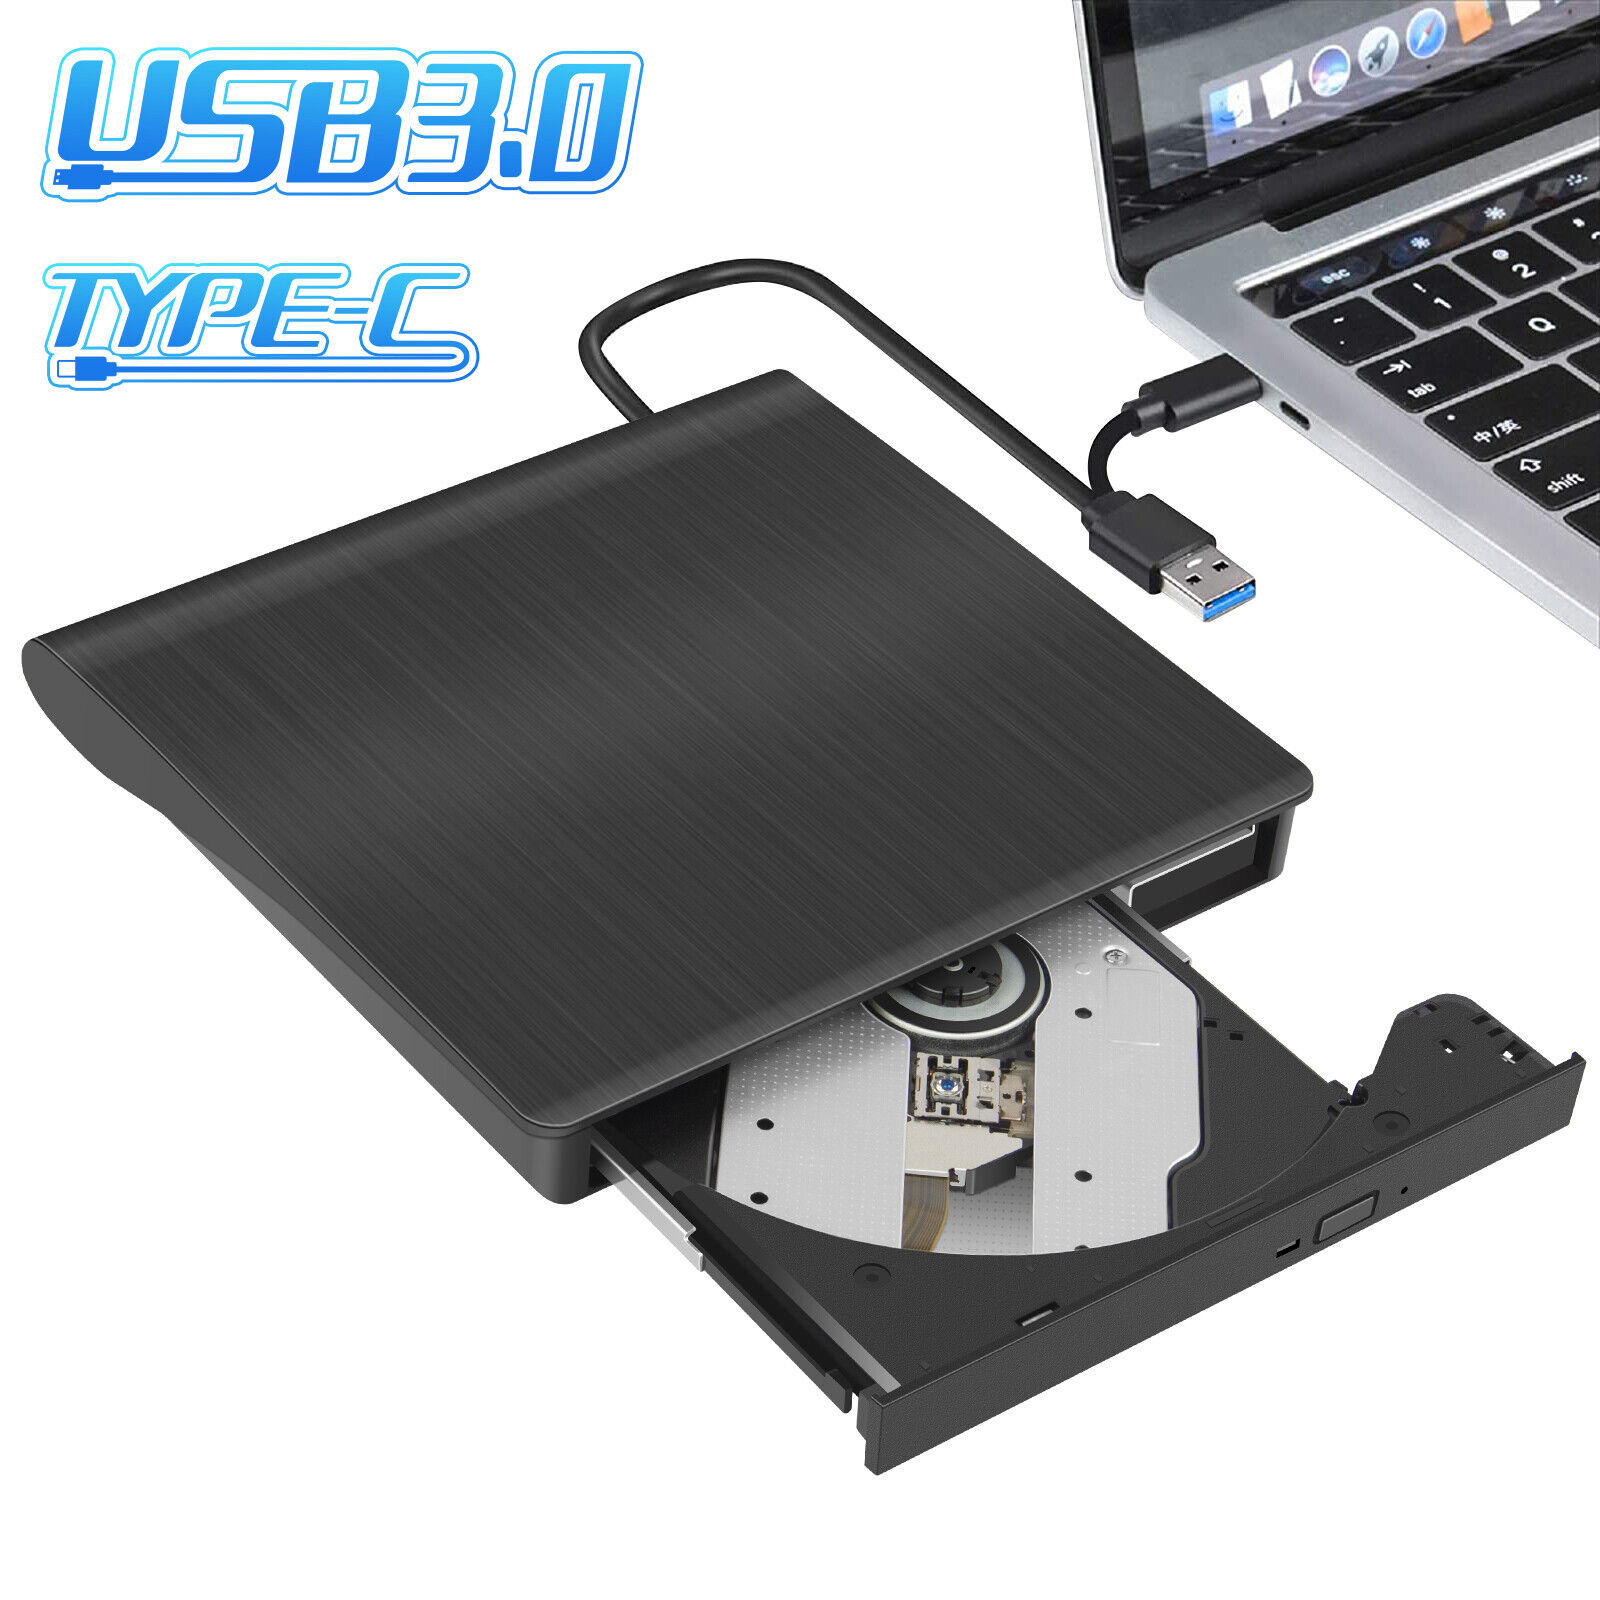 2-in-1 USB 3.0+Type-C External DVD CD Disc Burner Drive Reader Player PC Laptop